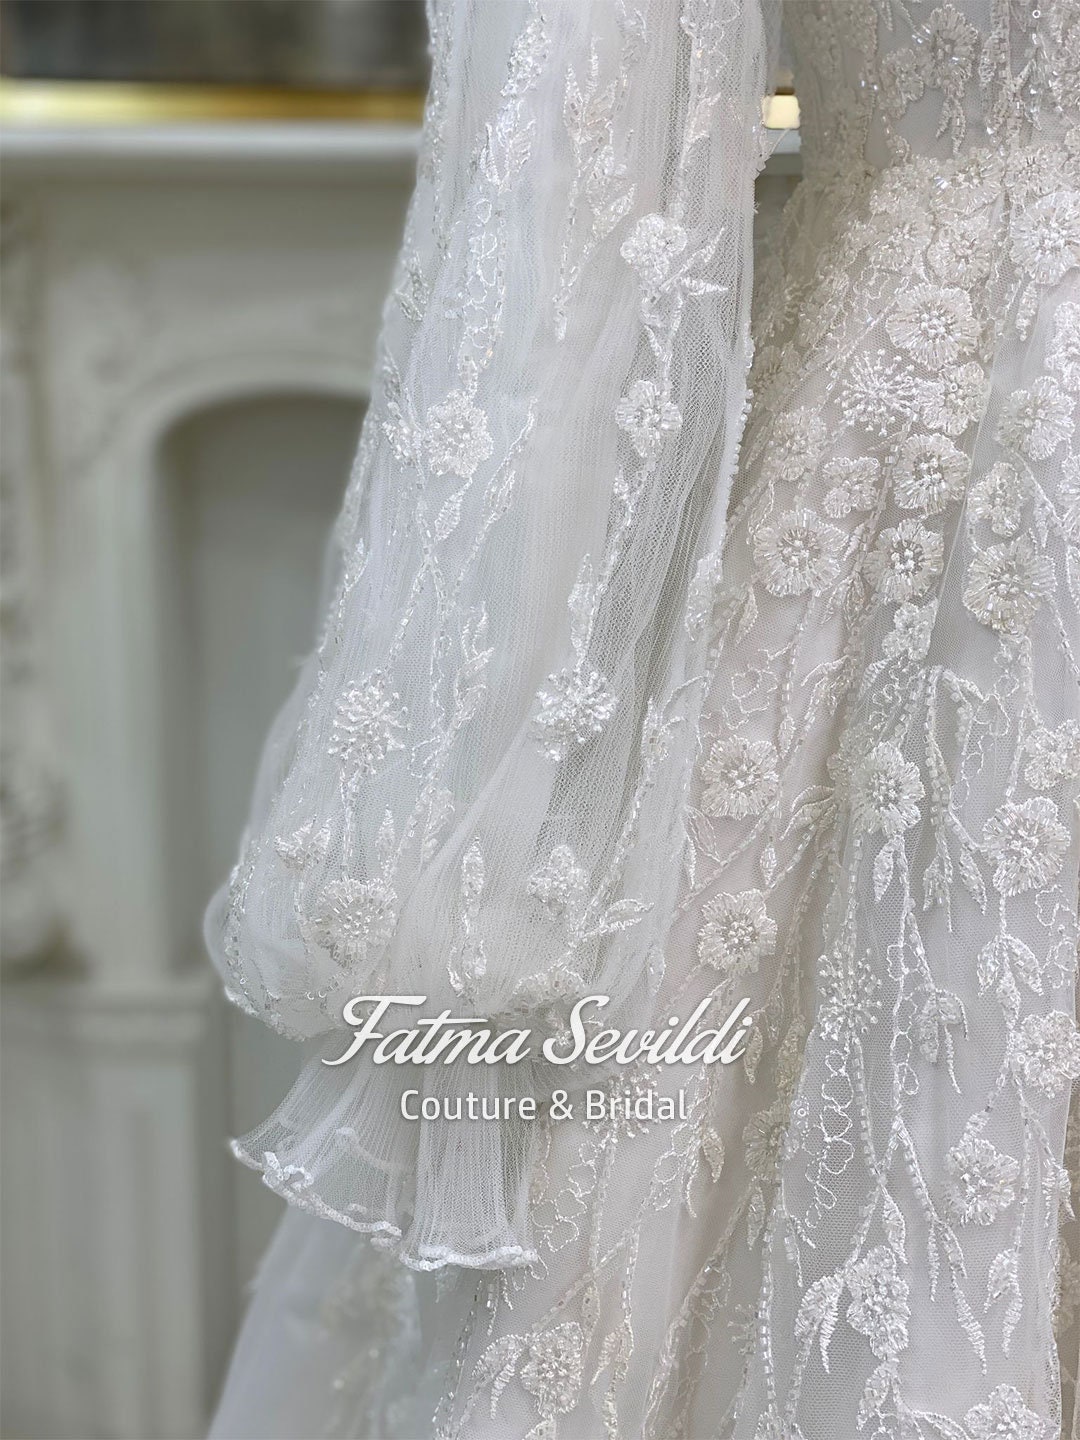 Long Sleeve White Lace Tulle Muslim Wedding Dress - VQ